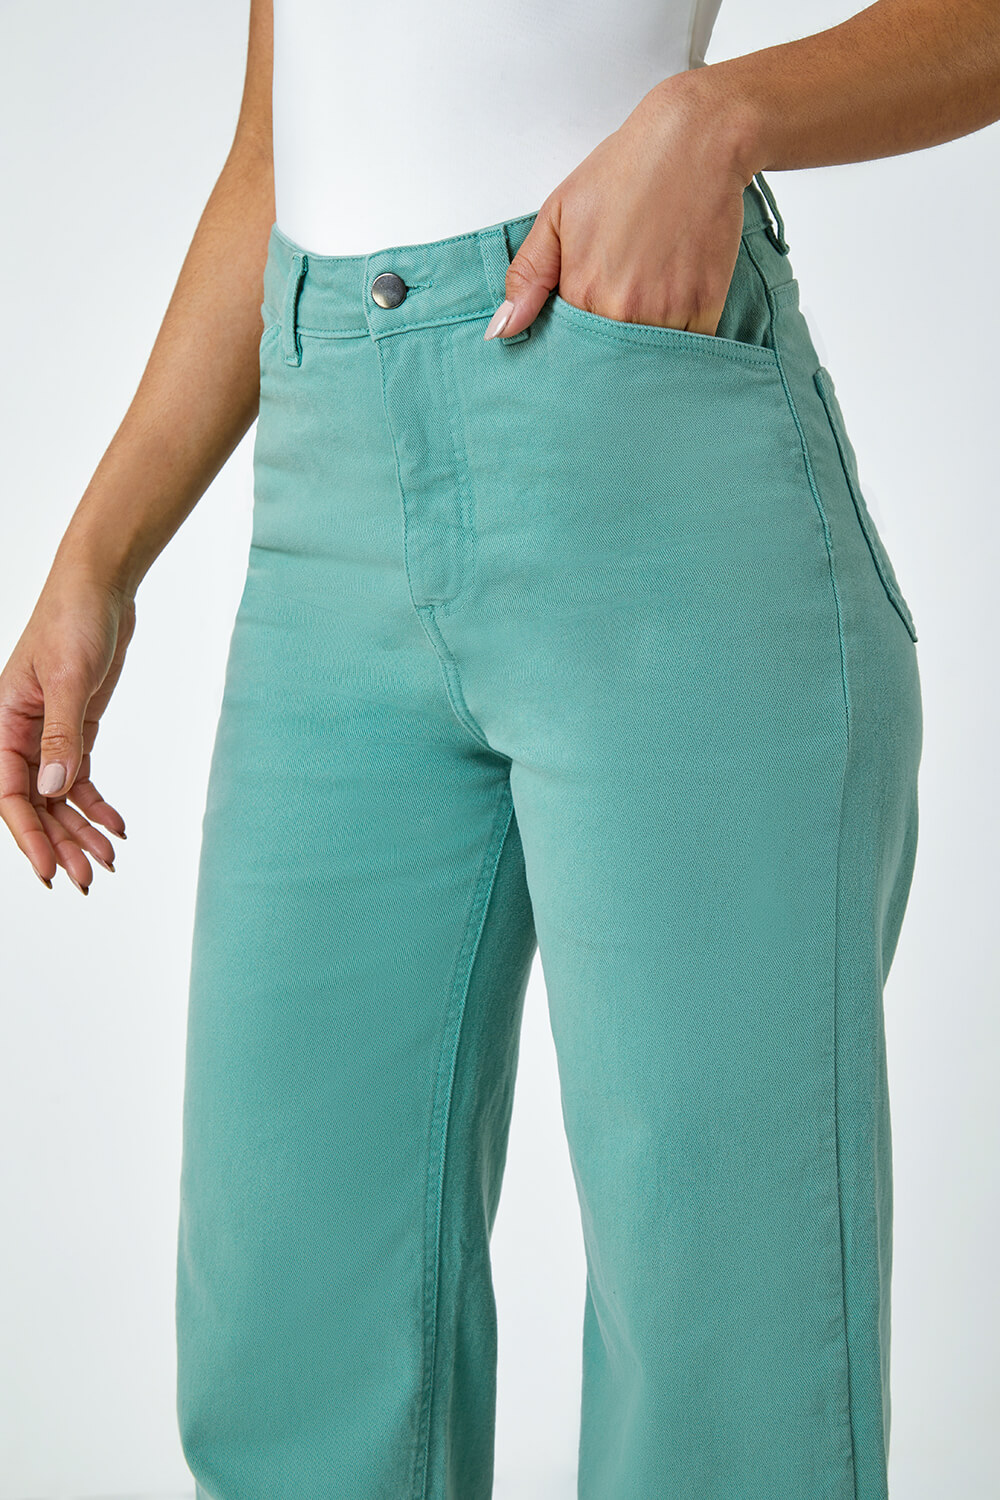 Sage Cotton Blend Wide Leg Stretch Jeans, Image 5 of 5